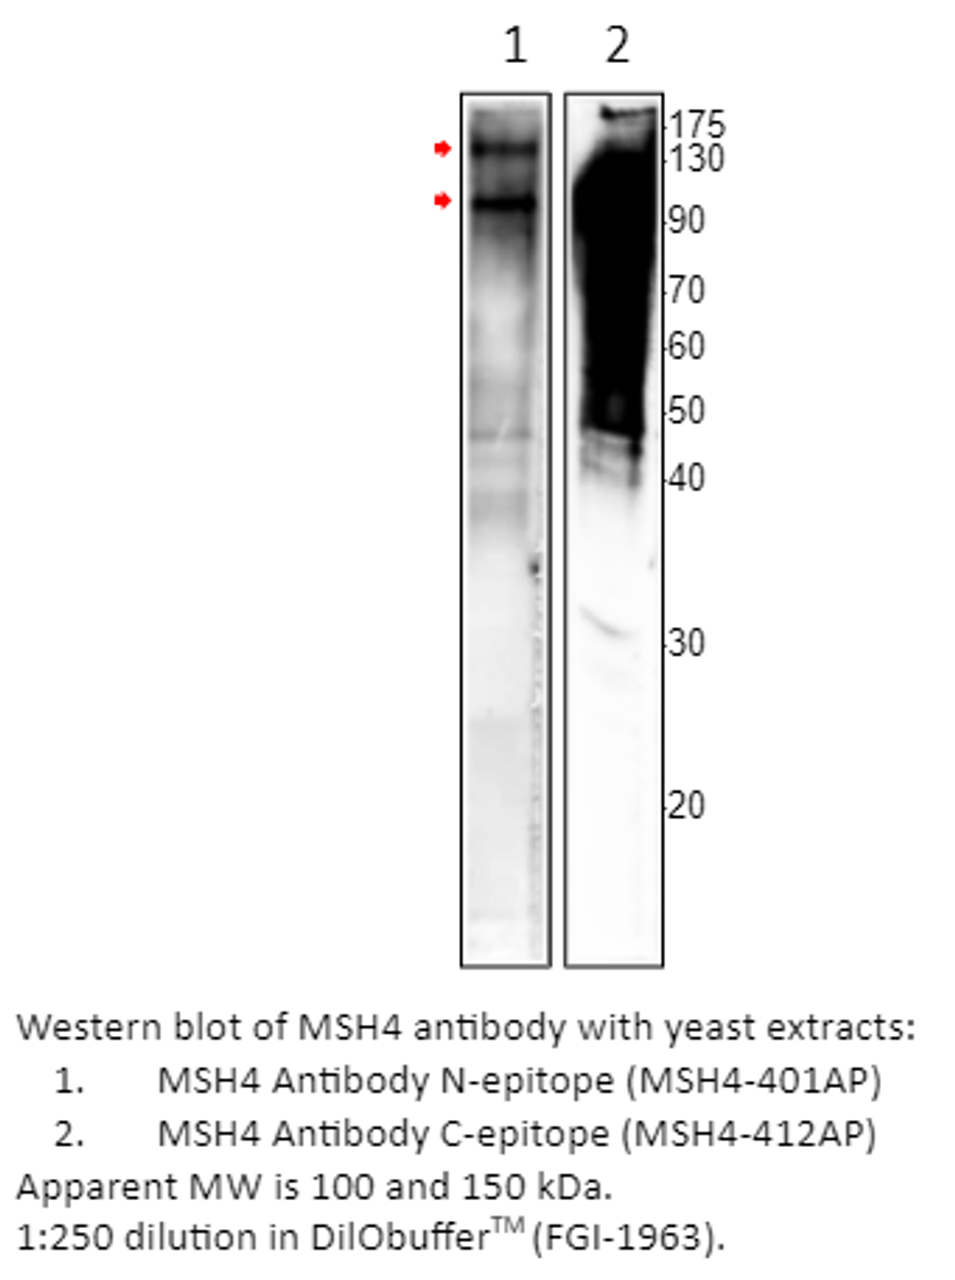 MSH4 Antibody from Fabgennix